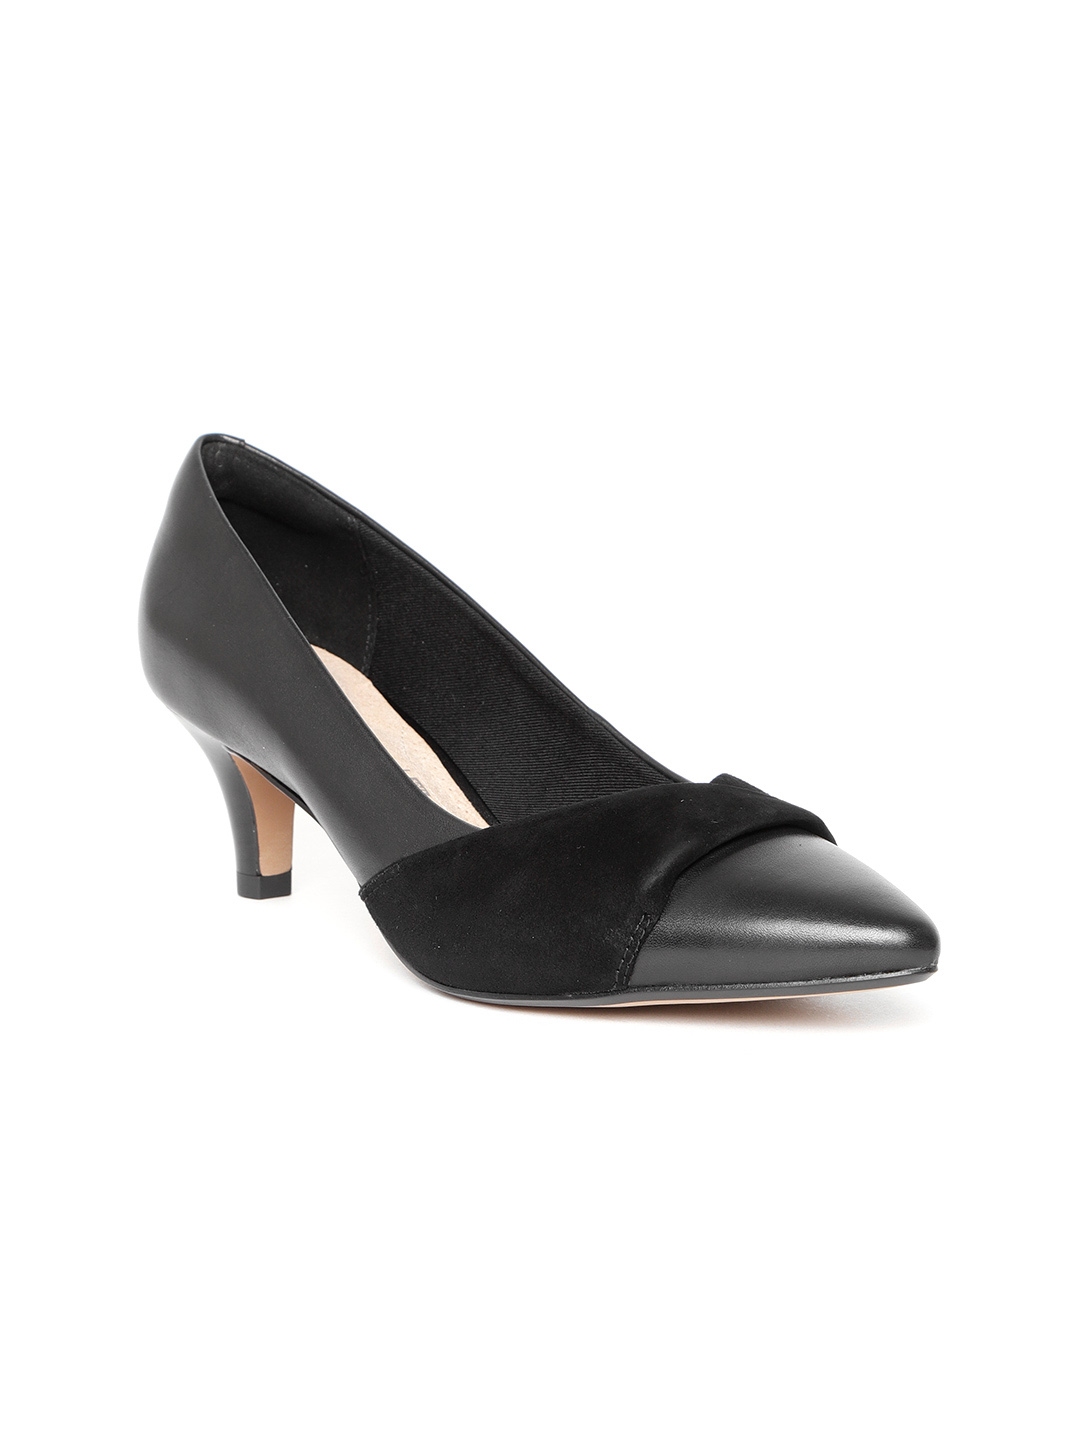 Buy Clarks Women Black Leather Solid Pumps - Heels for Women 7256976 ...